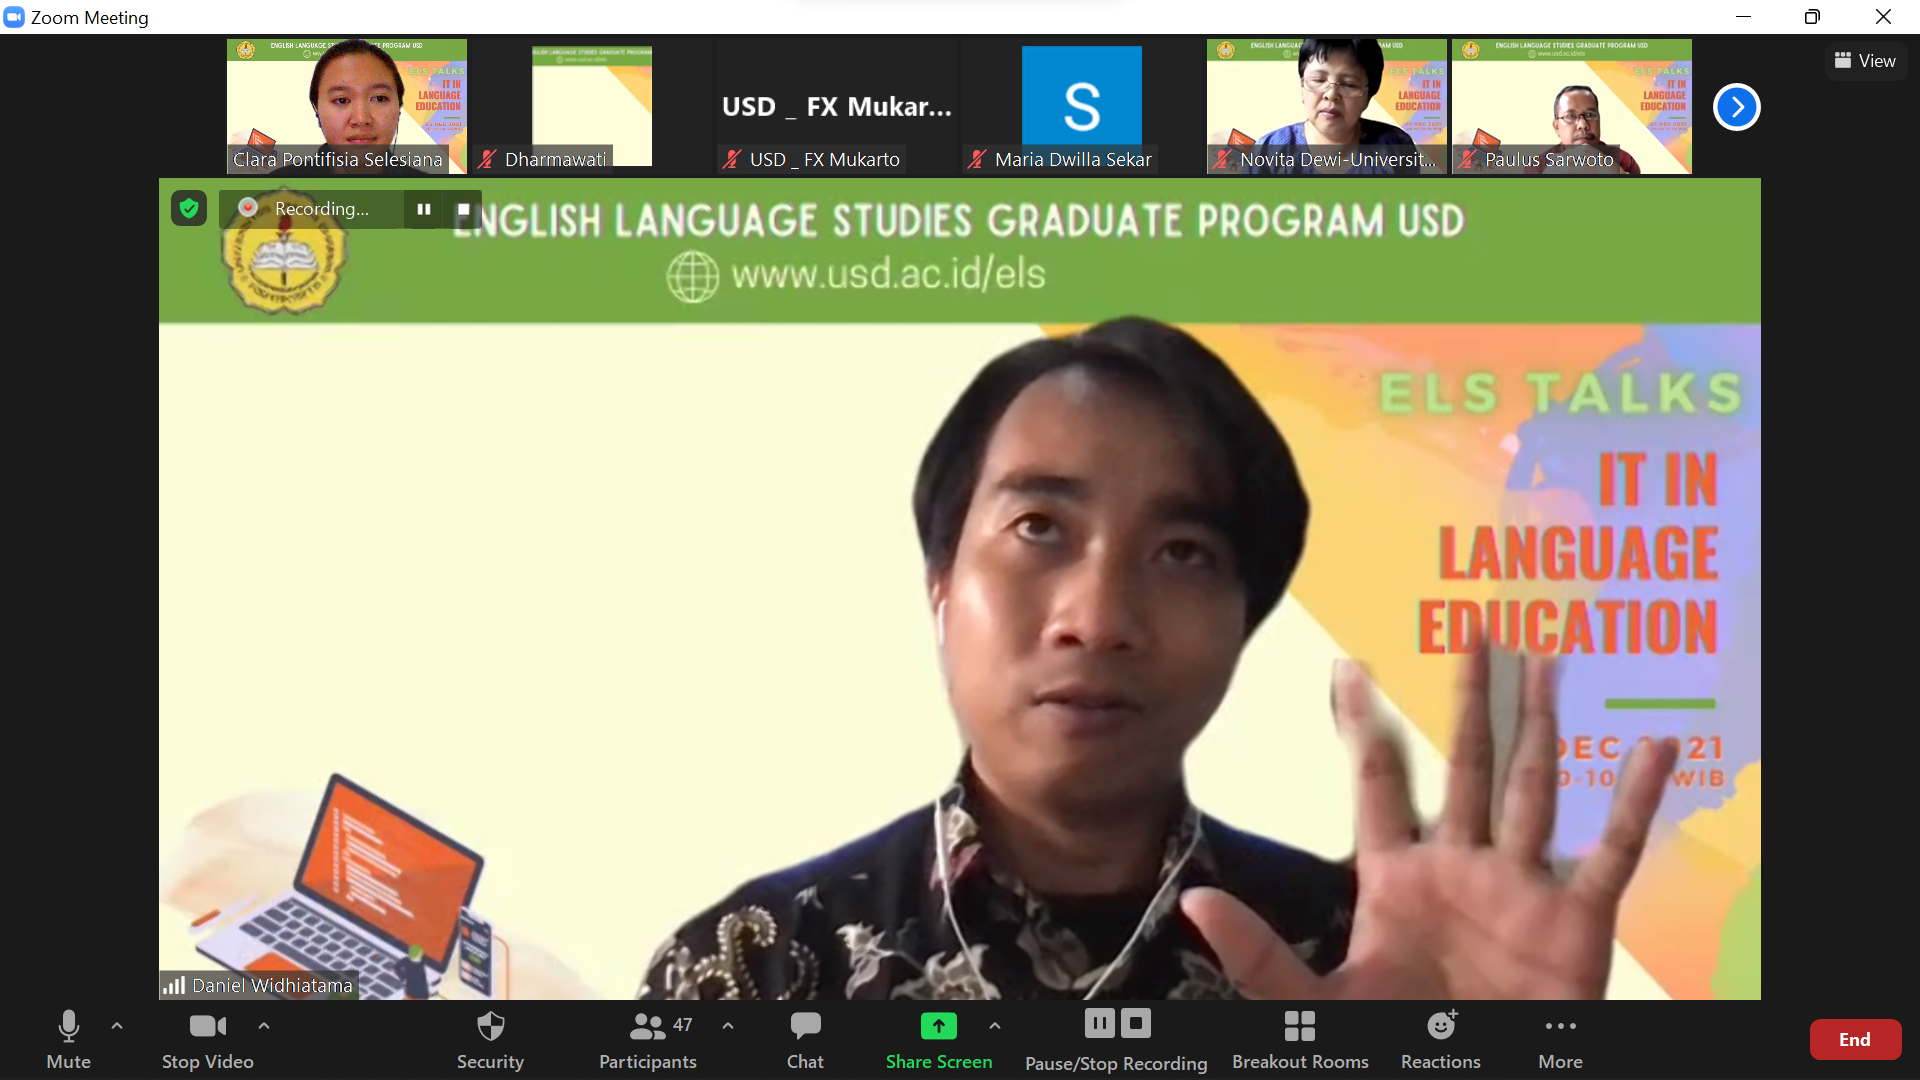 ELS TALKS: IT IN LANGUAGE EDUCATION  :: Fakultas Pasca Sarjana USD Yogyakarta